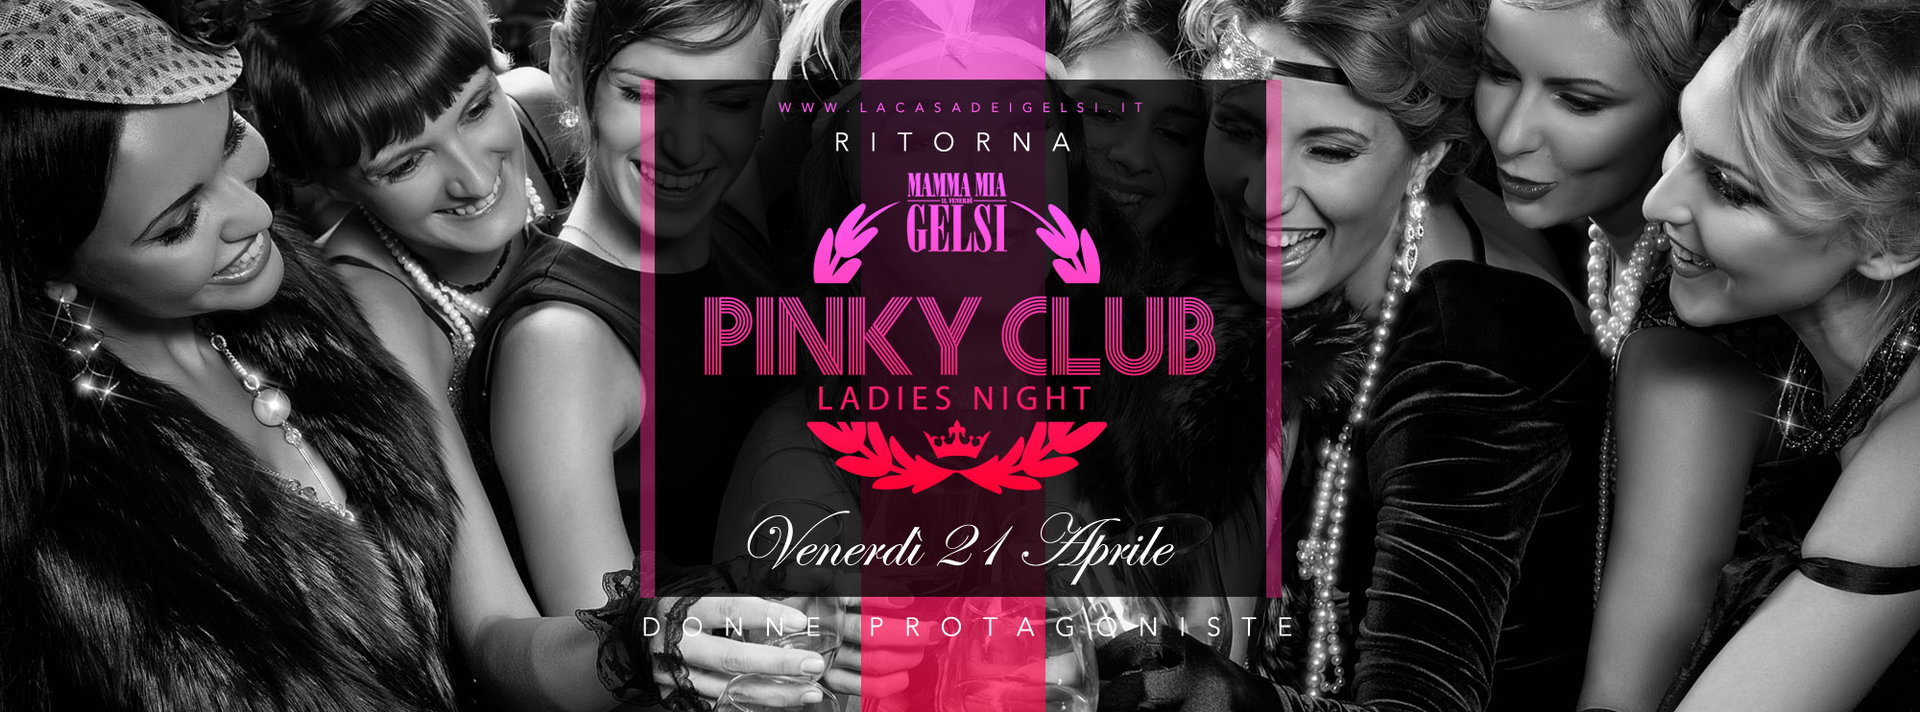 Pinky club 2 - 21 aprile 2017